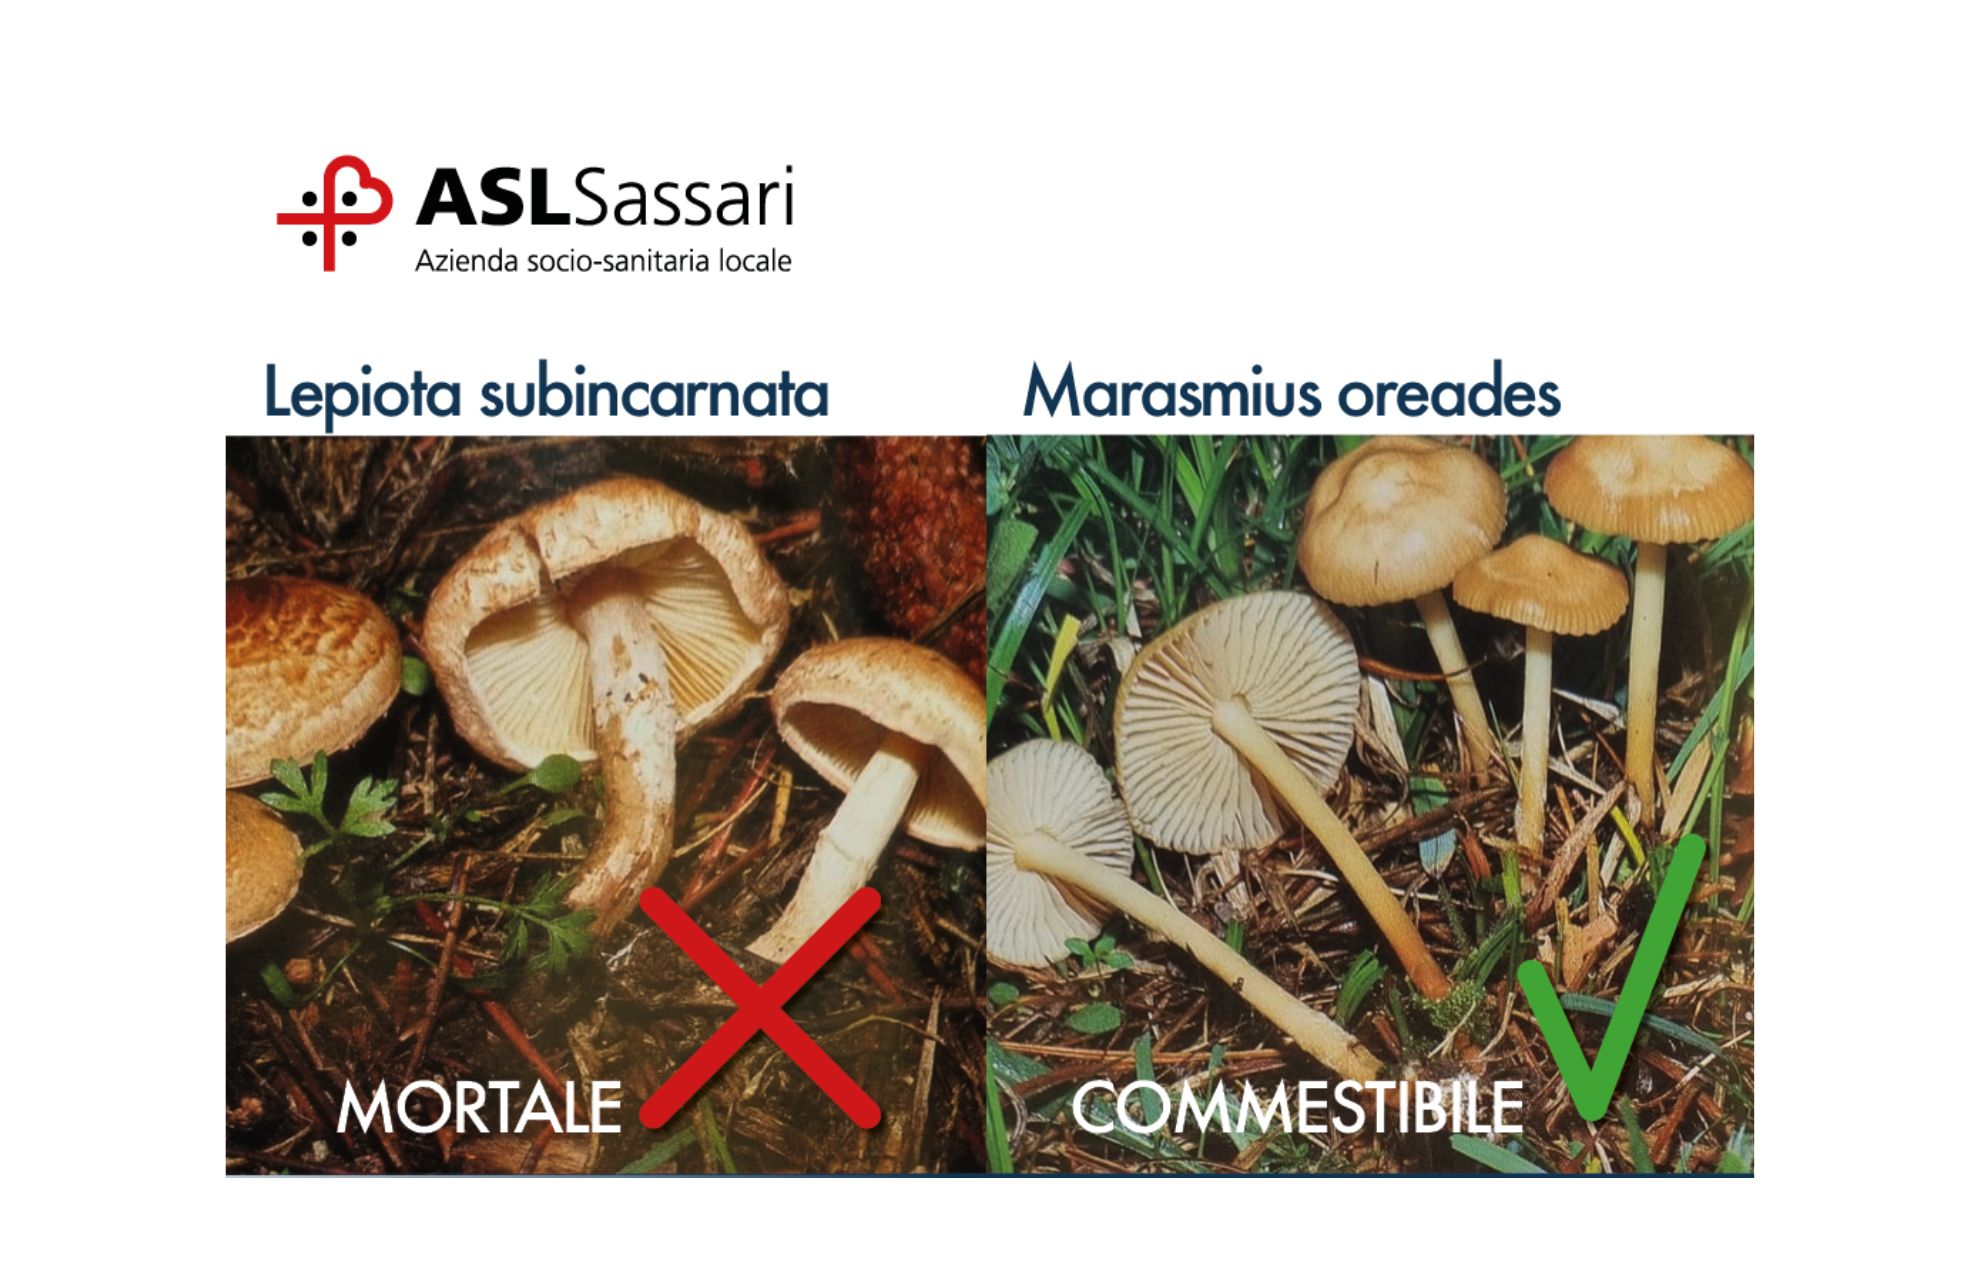 Asl Sassari: prima intossicazione da consumo di funghi